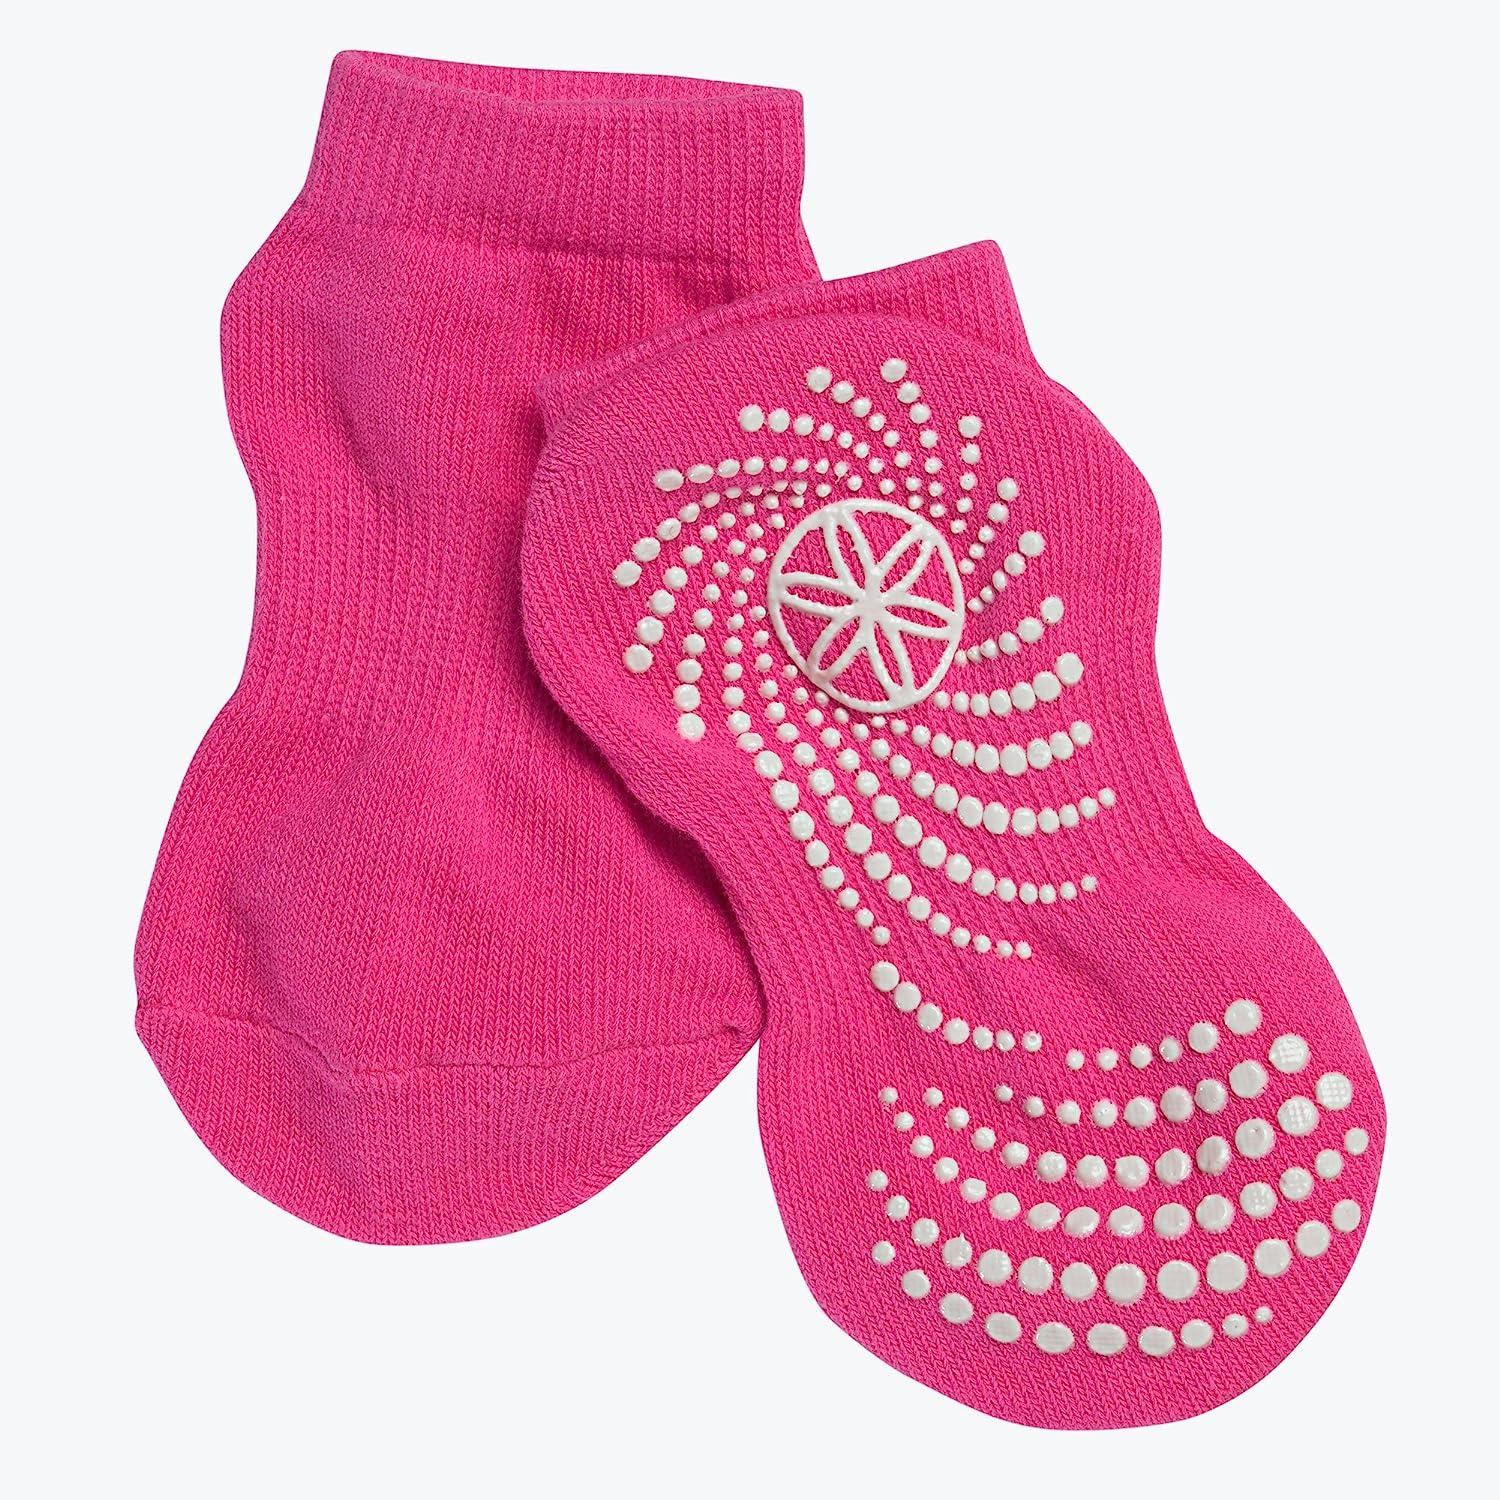 Gaiam Kids Yoga Socks - 2 Pairs 